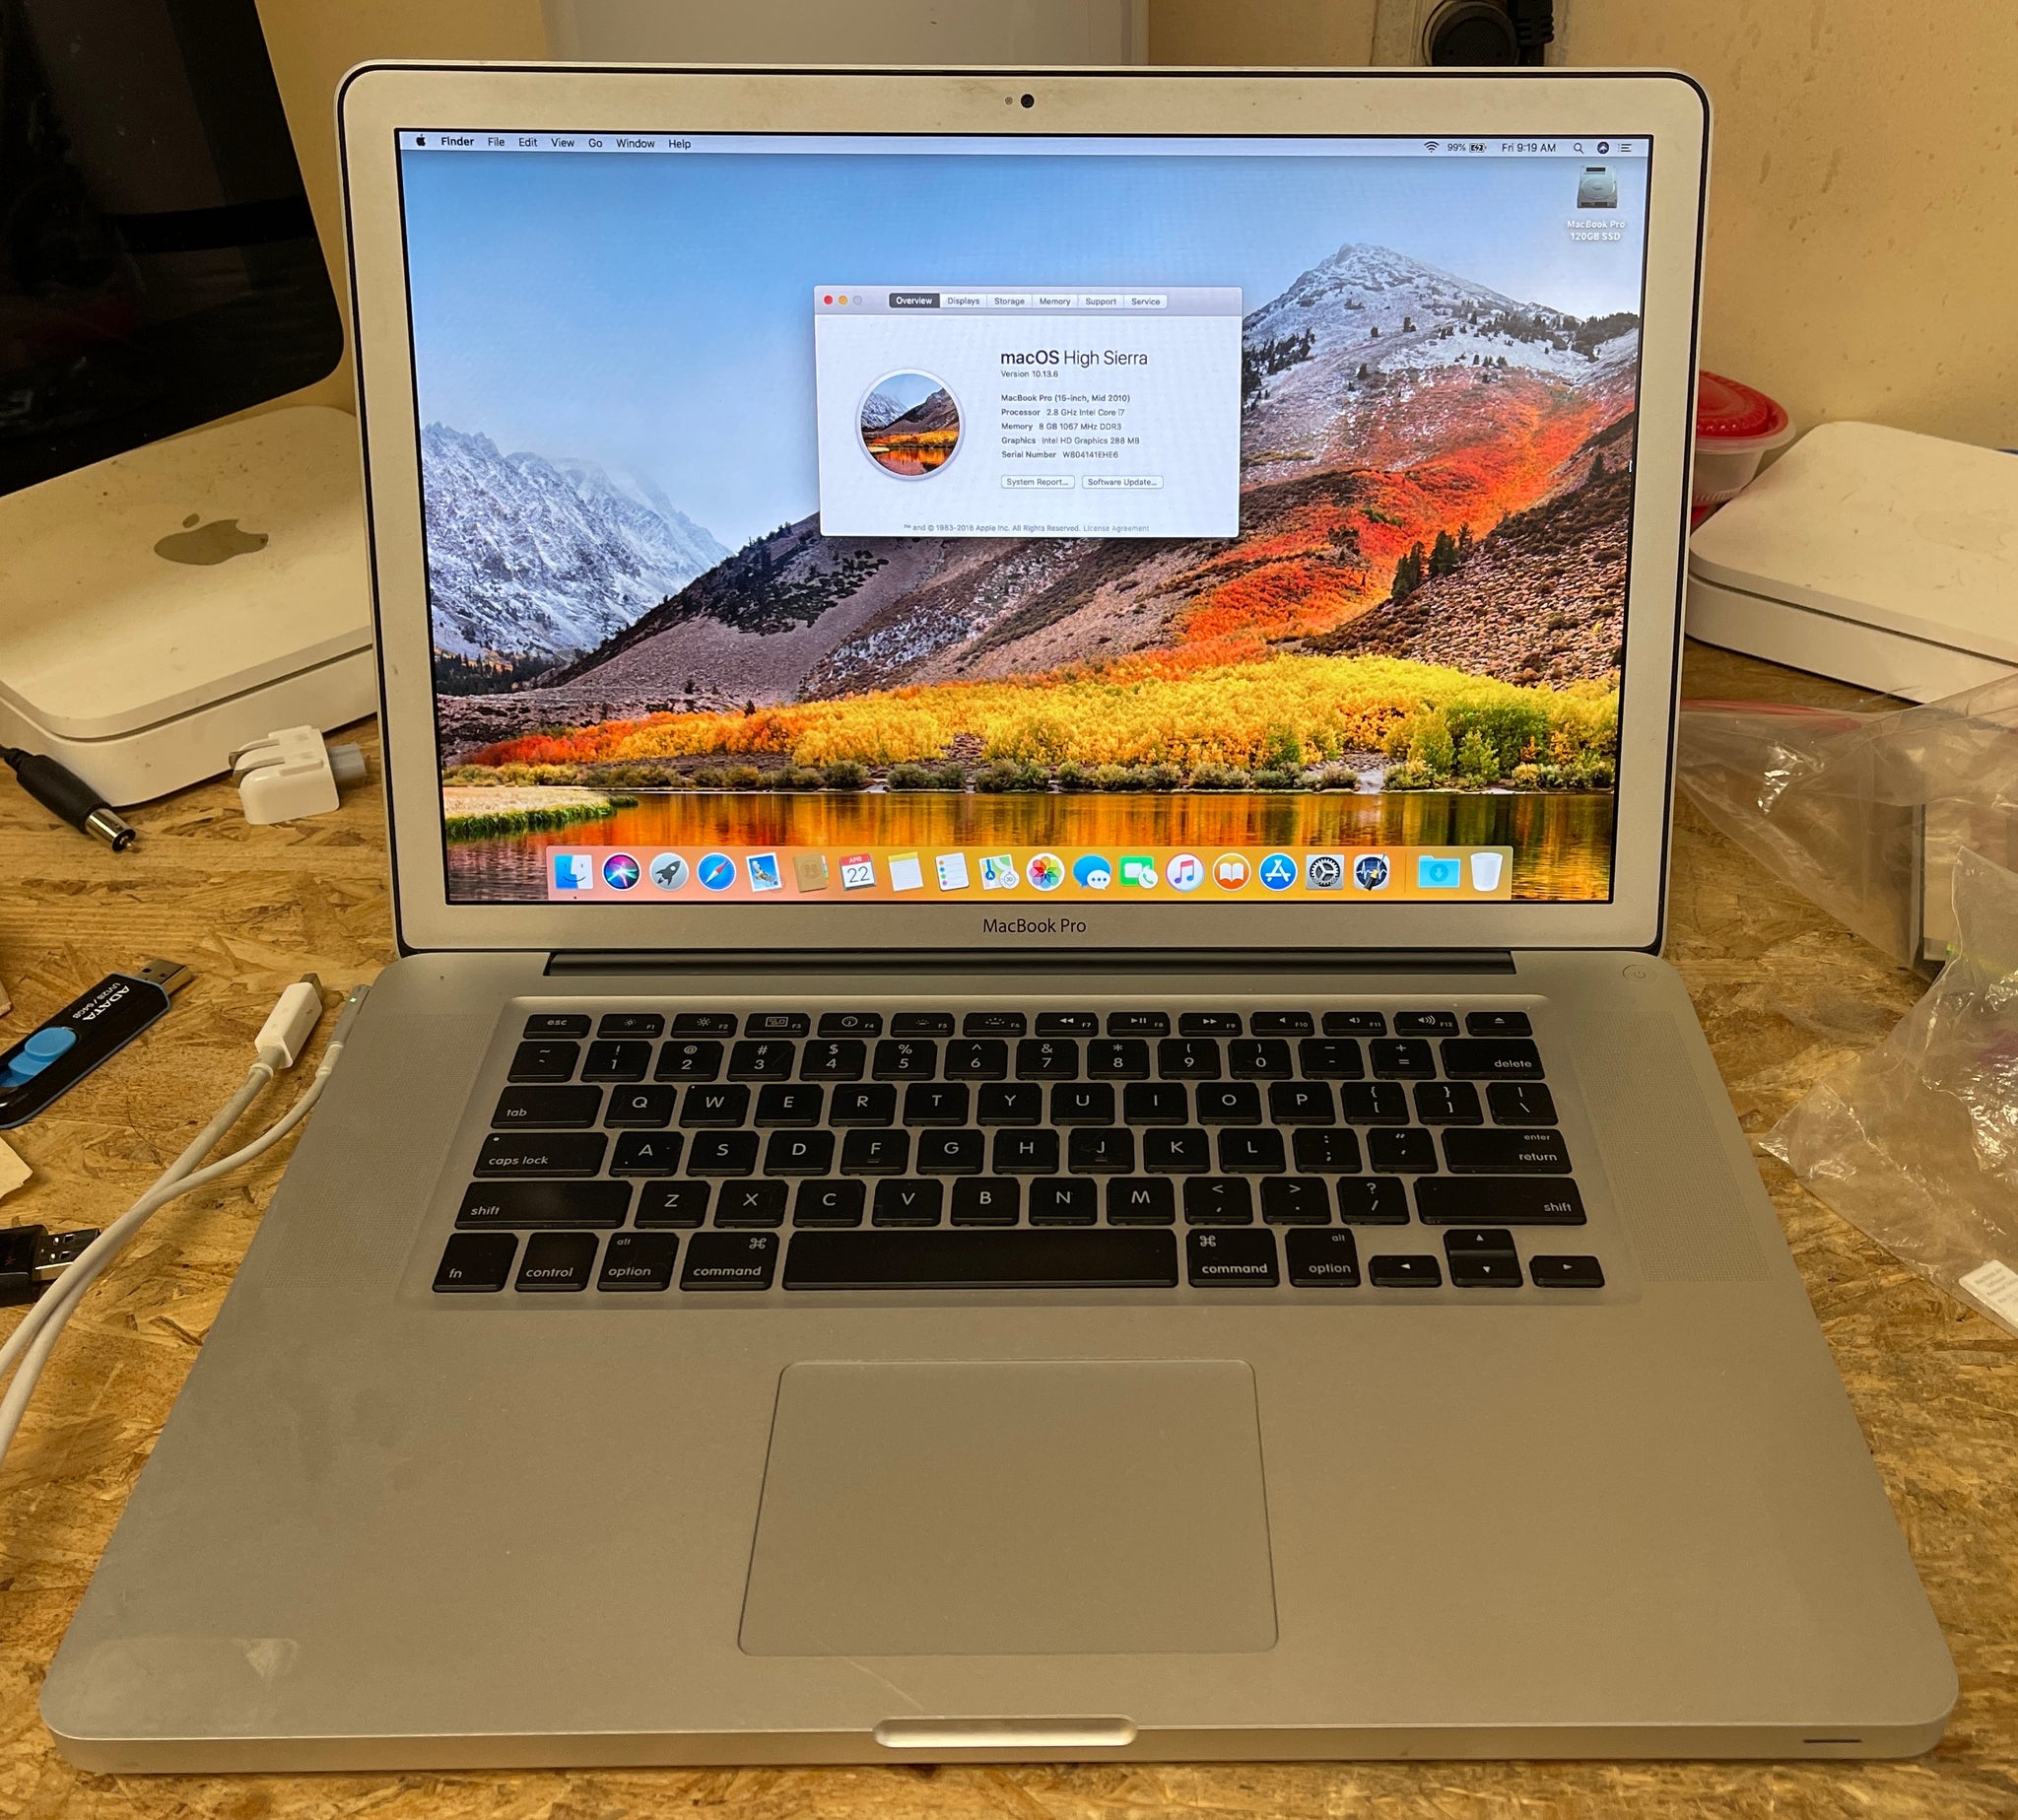 Apple MacBook Pro 15-inch Mid 2010 2.8GHz Intel Core i7 (MC847LL/A